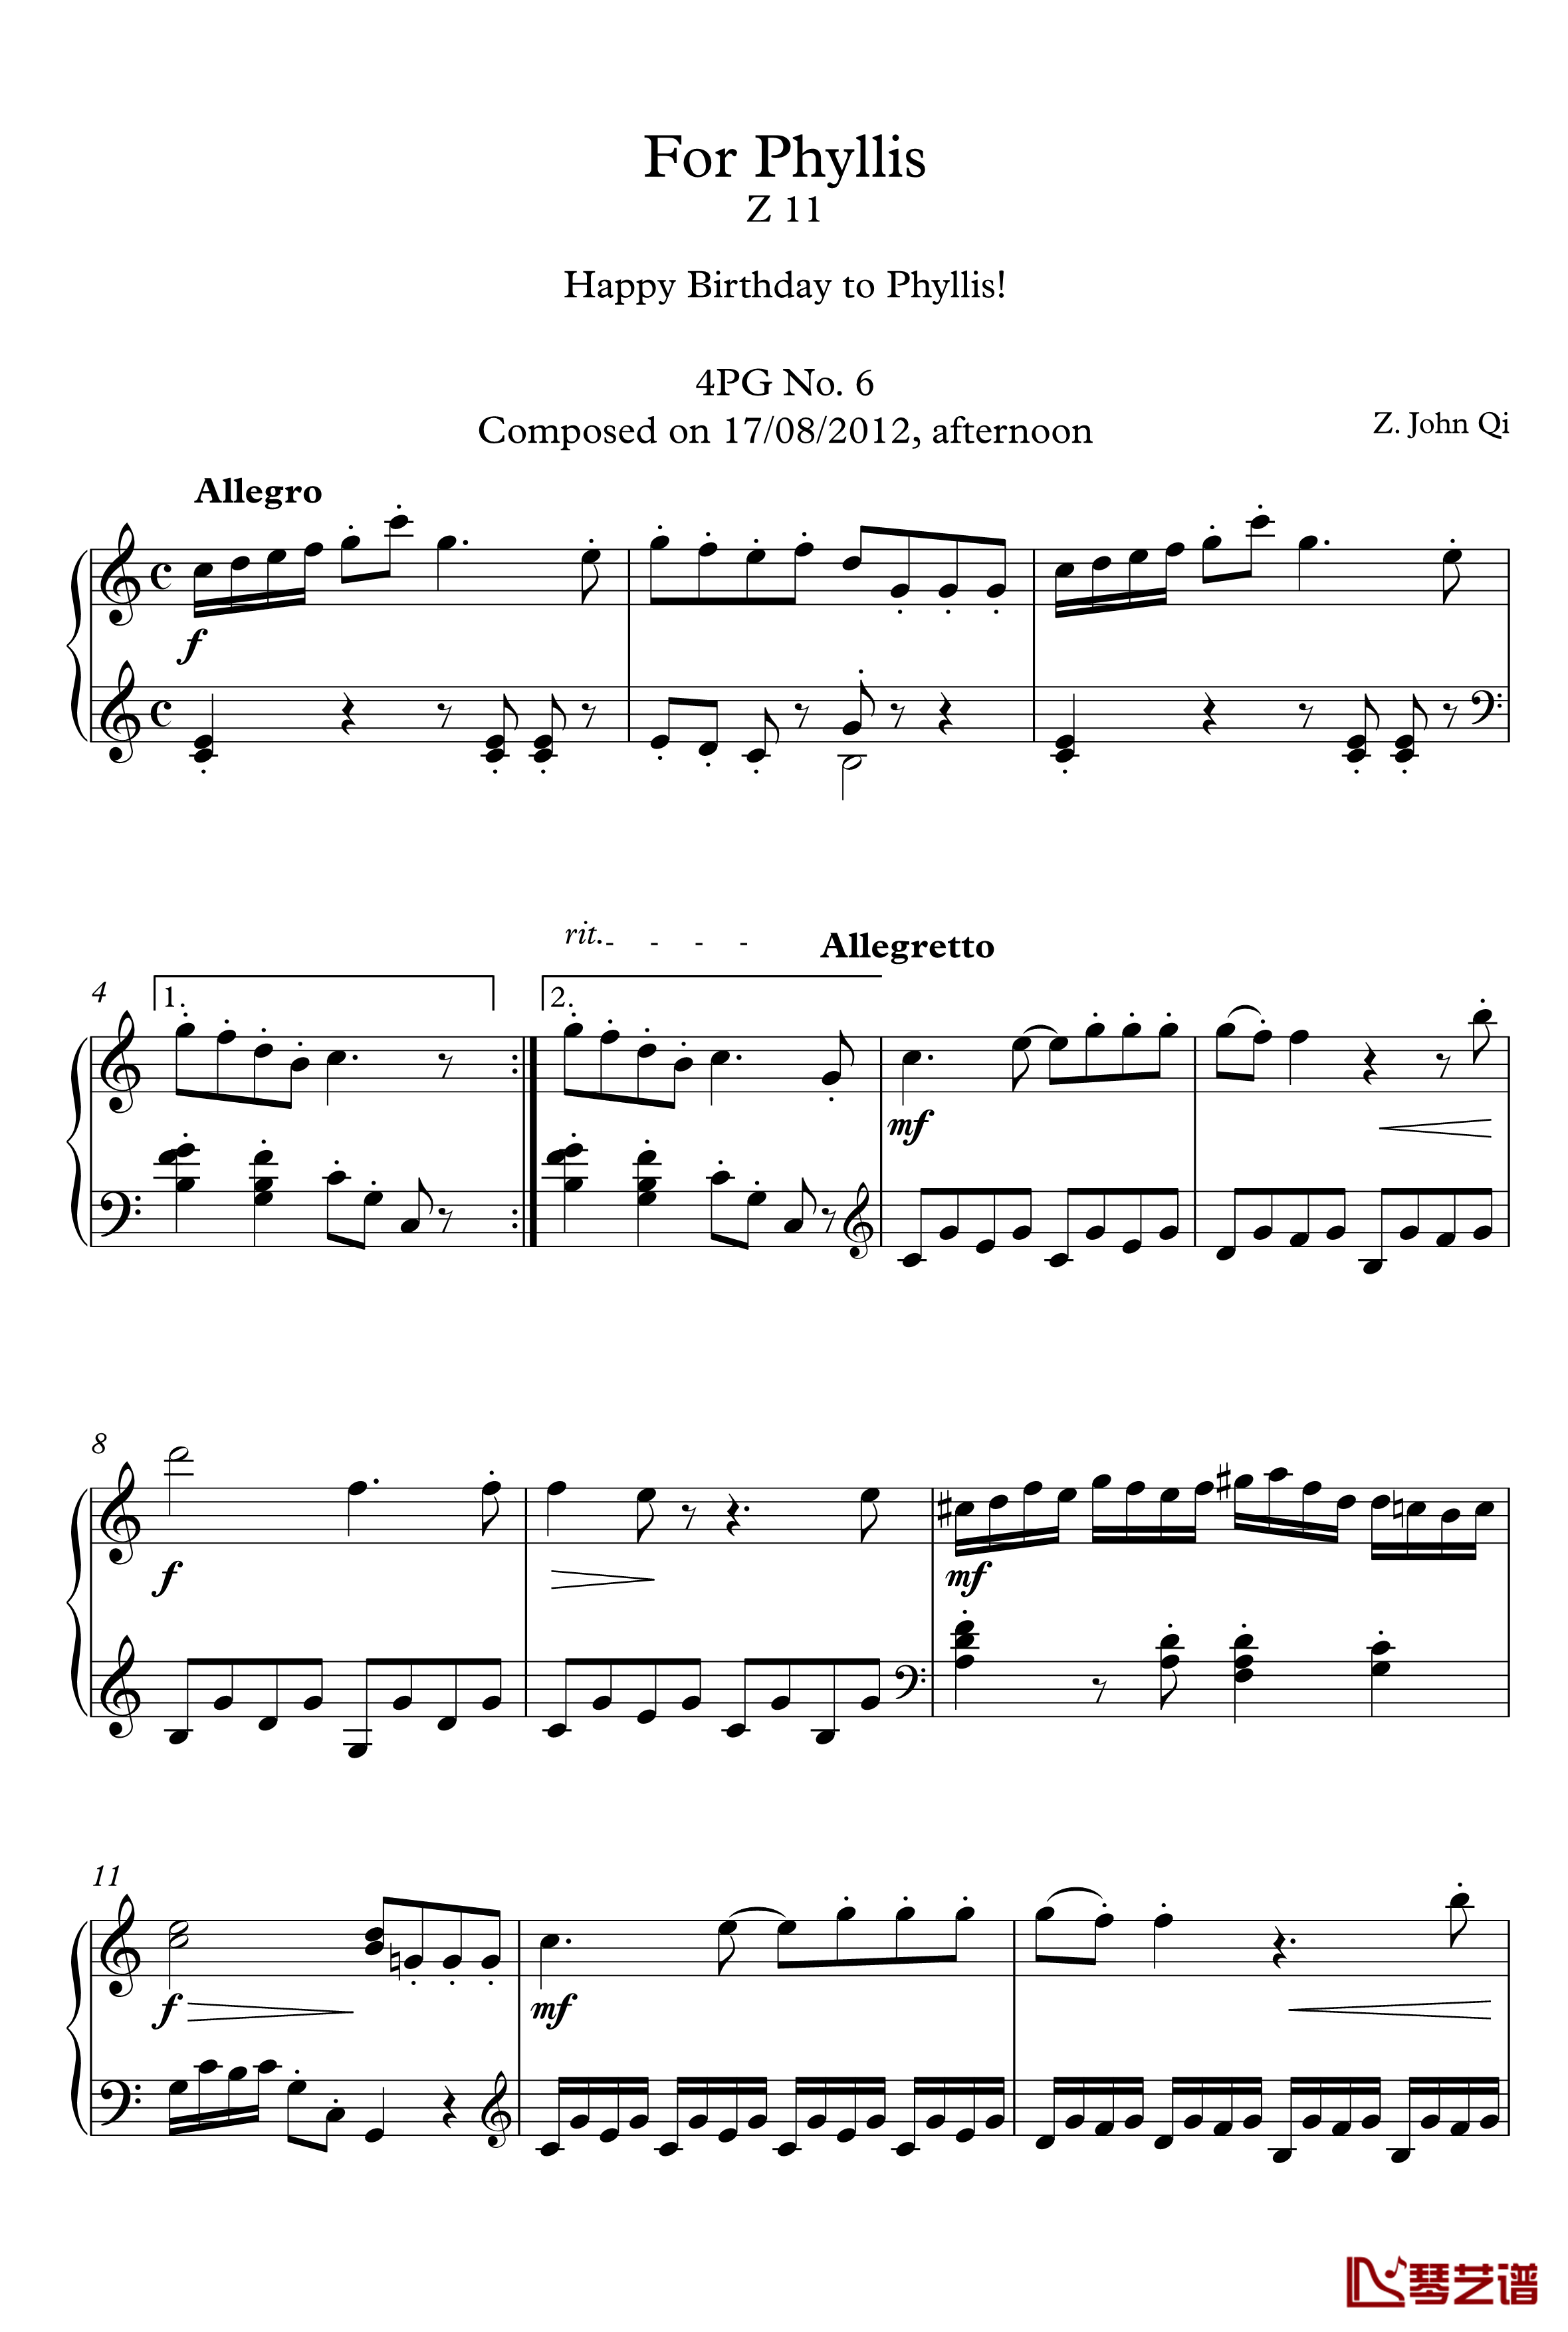 For Phyllis钢琴谱-4PG No. 6-漆政-Z11